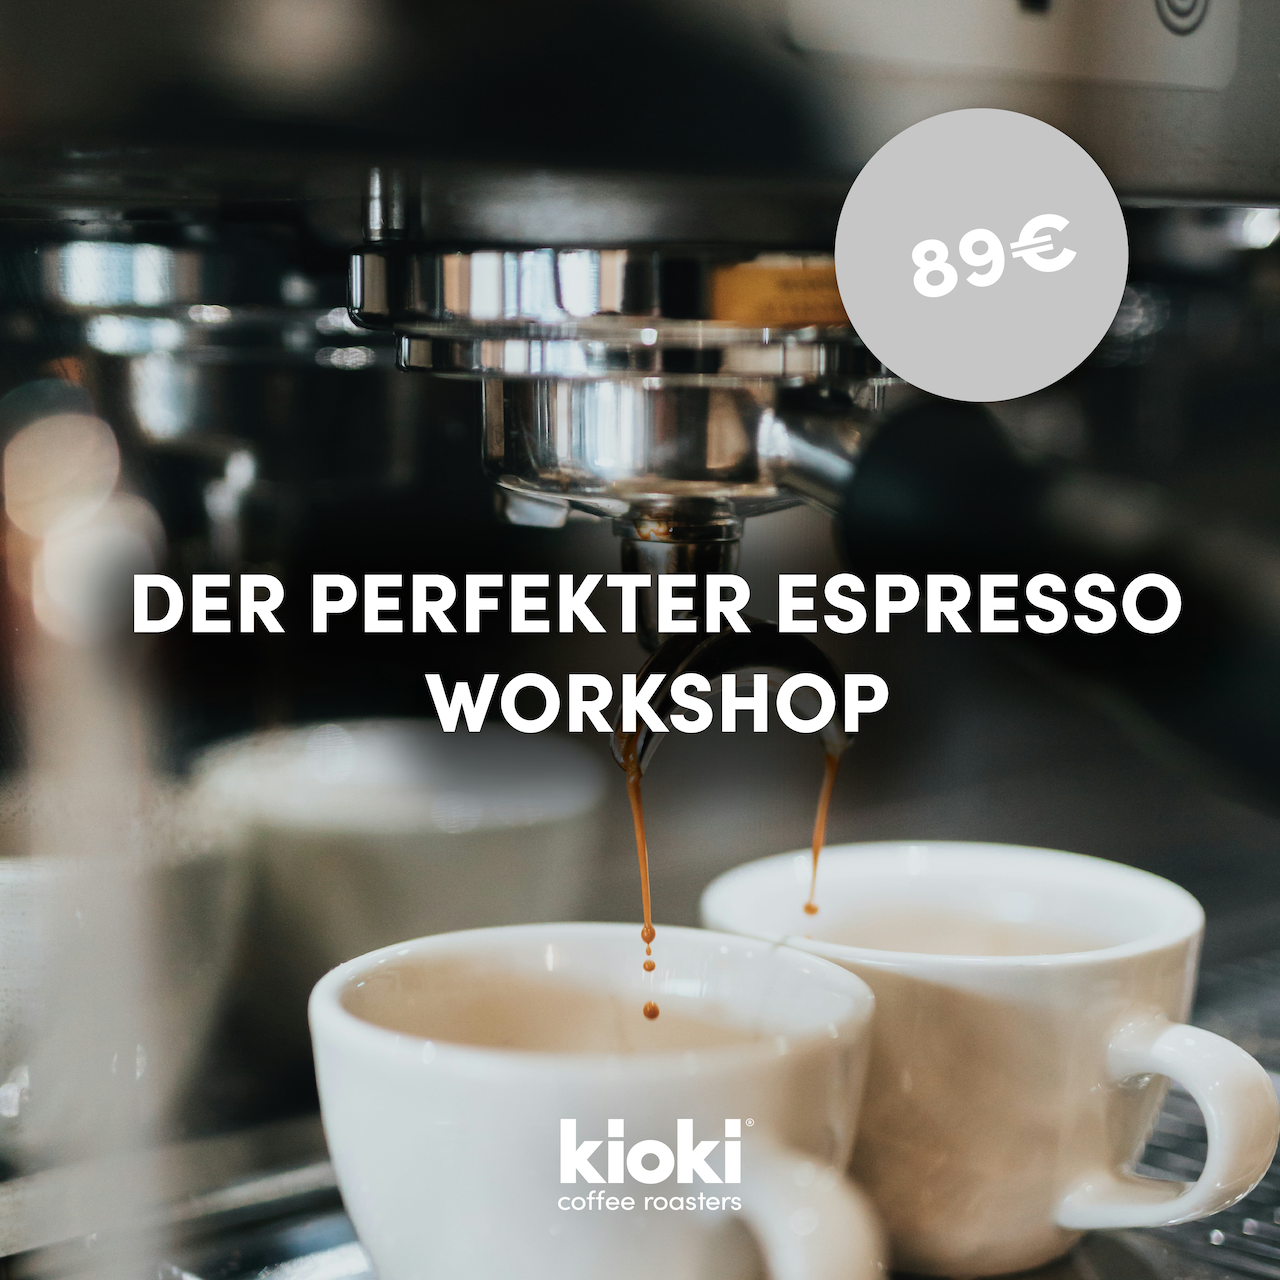 Workshop "Perfekter Espresso"